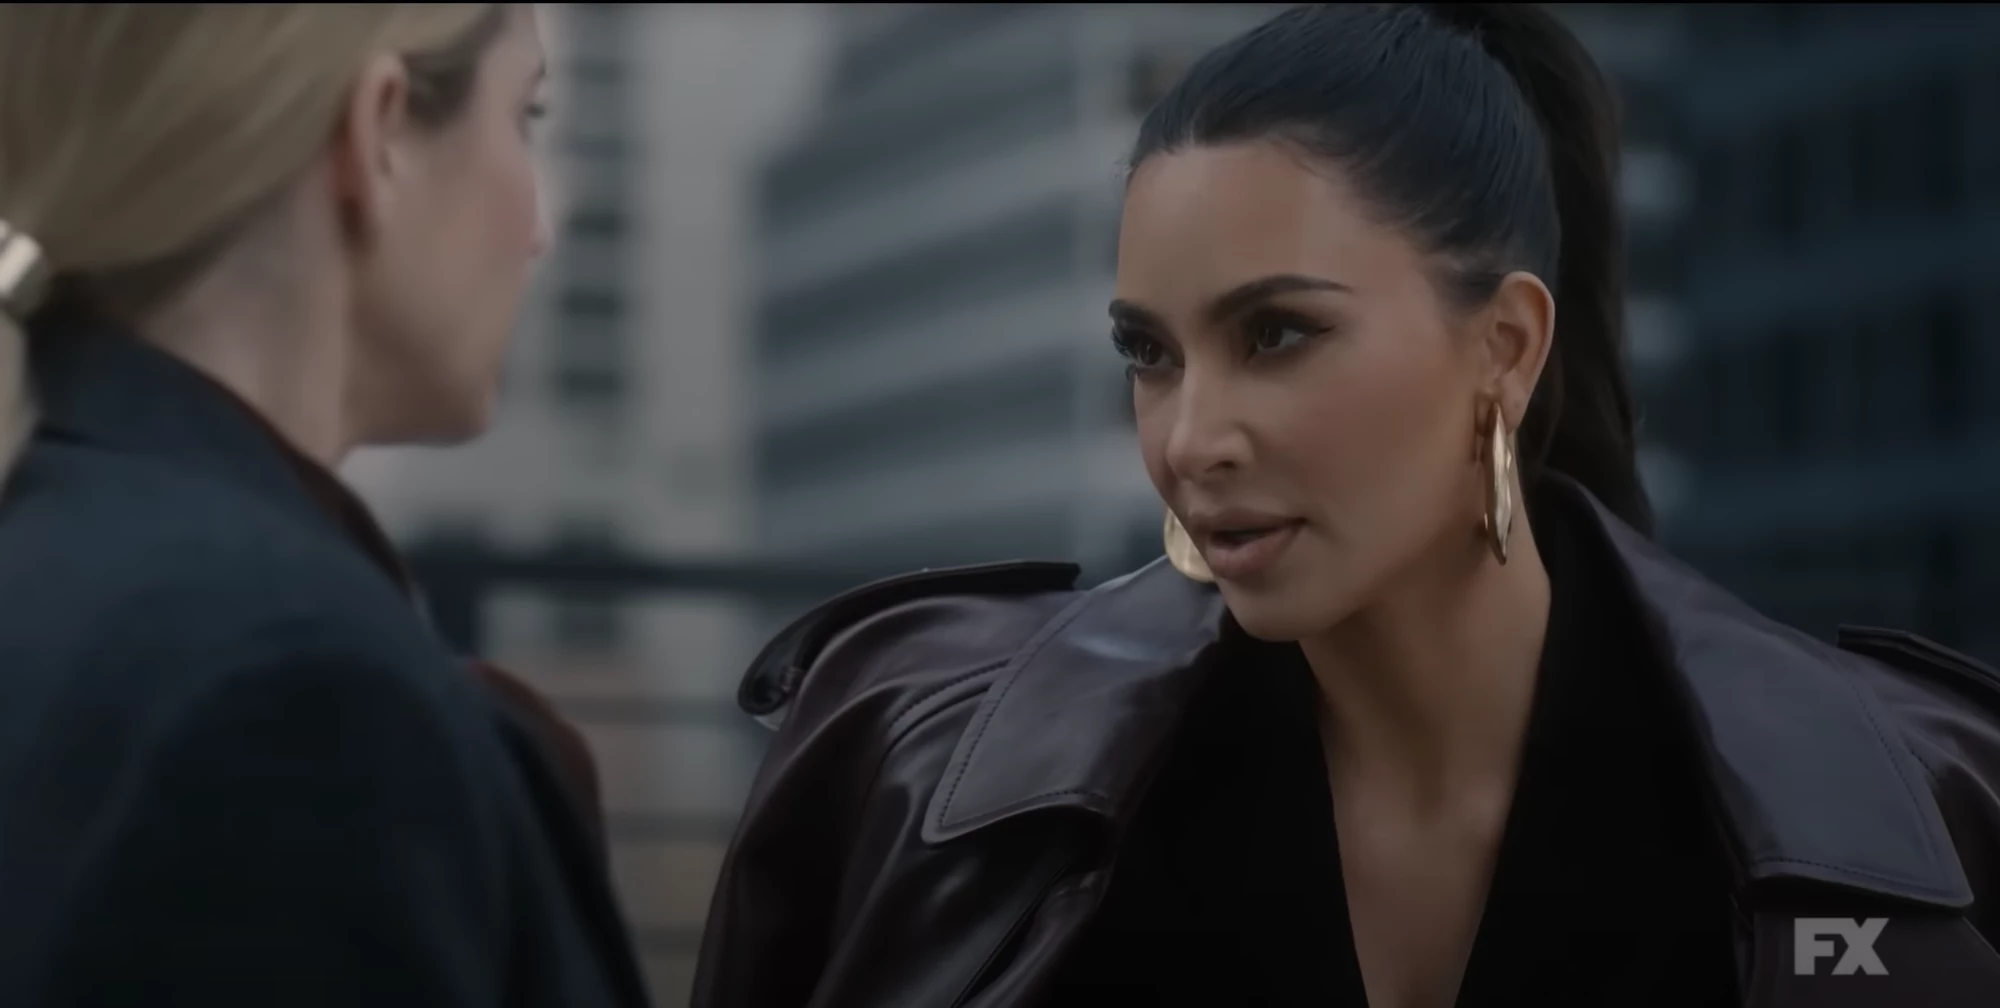 Kim Kardashian Not Actually Speaking On 'American Horror Story'